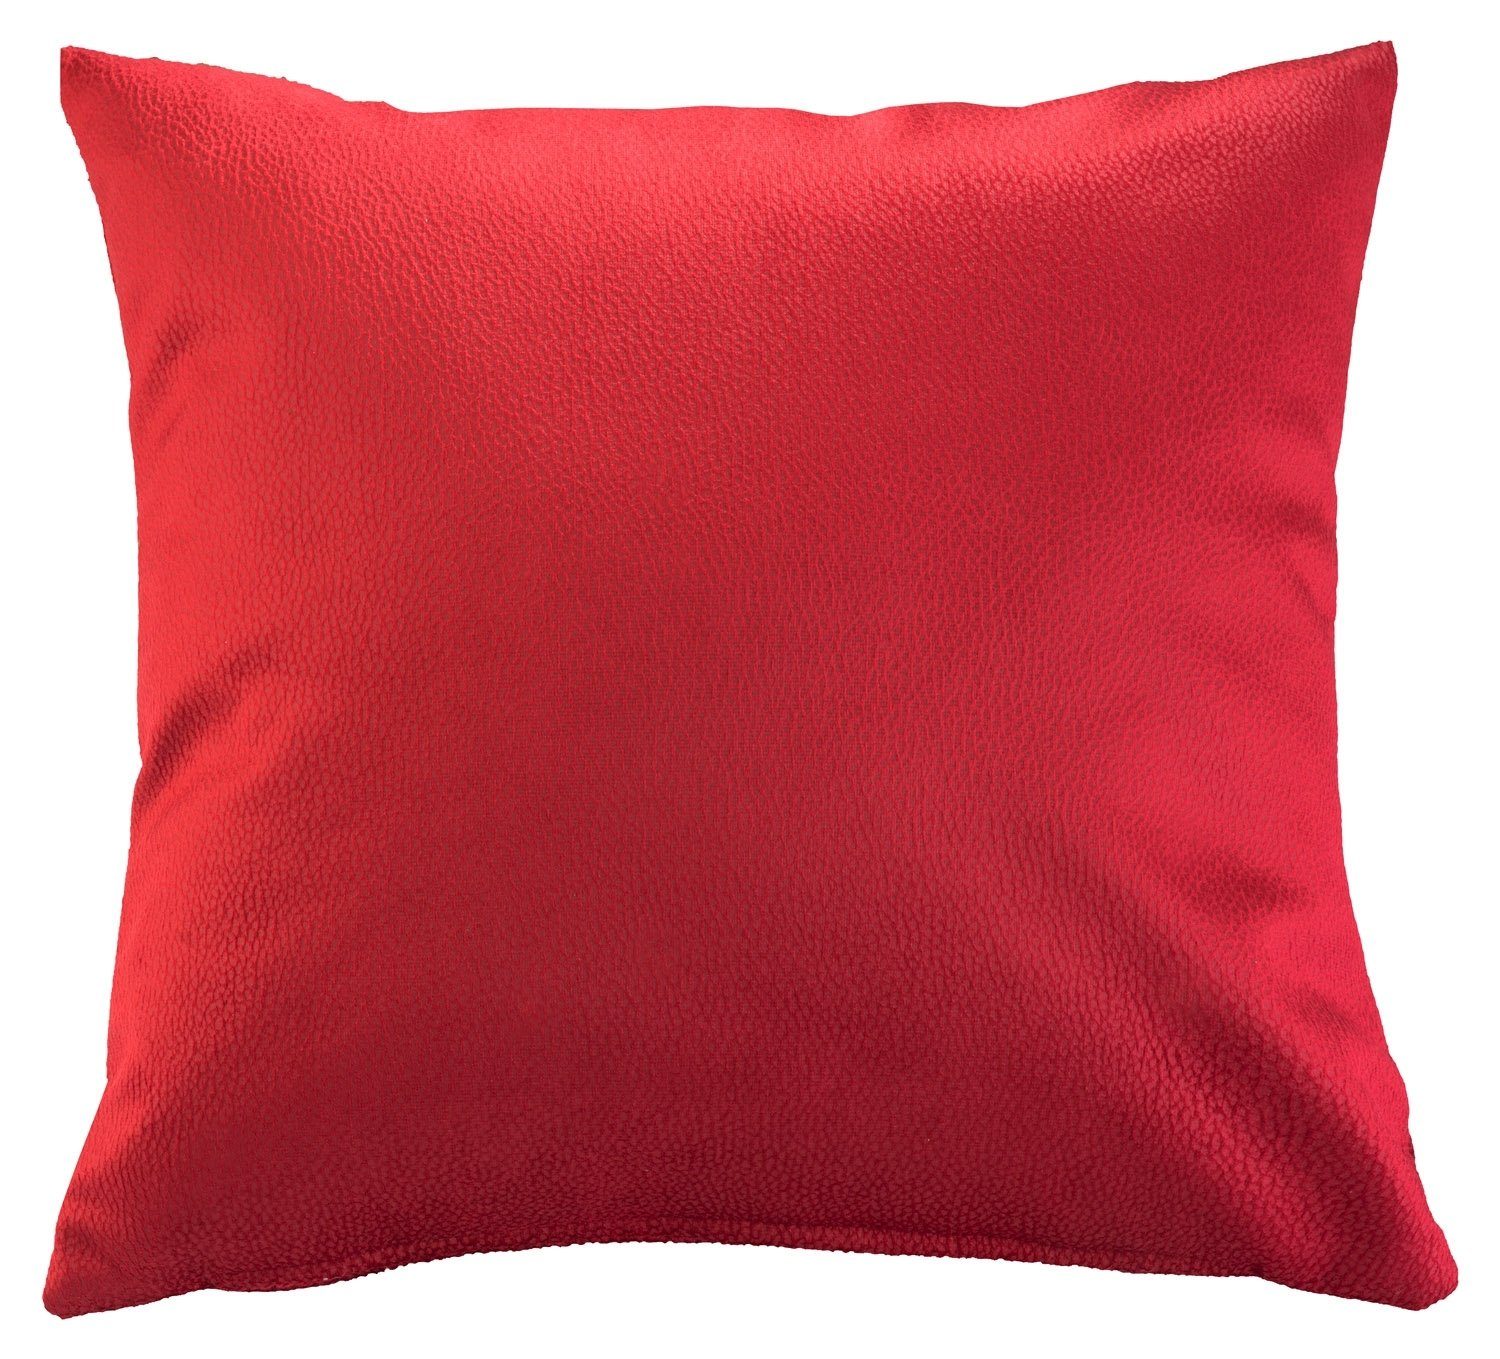 Kissenhülle BELLA, Rot, Unifarben, Kunstfaser, 40 x 40 cm, (1 Stück)